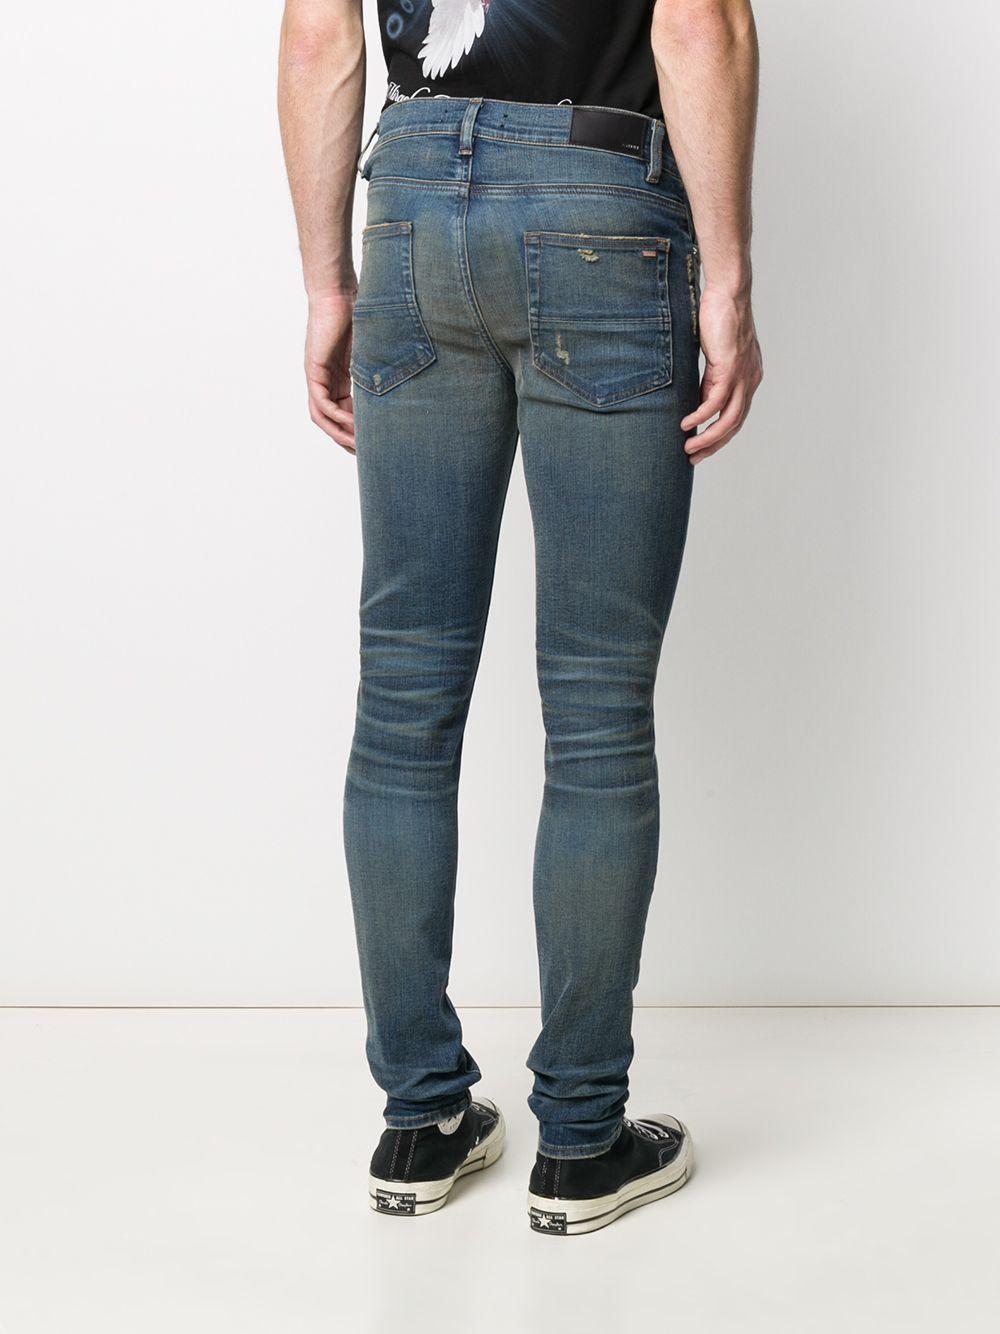 Amiri Denim Stonewashed Skinny Jeans in Blue for Men - Lyst